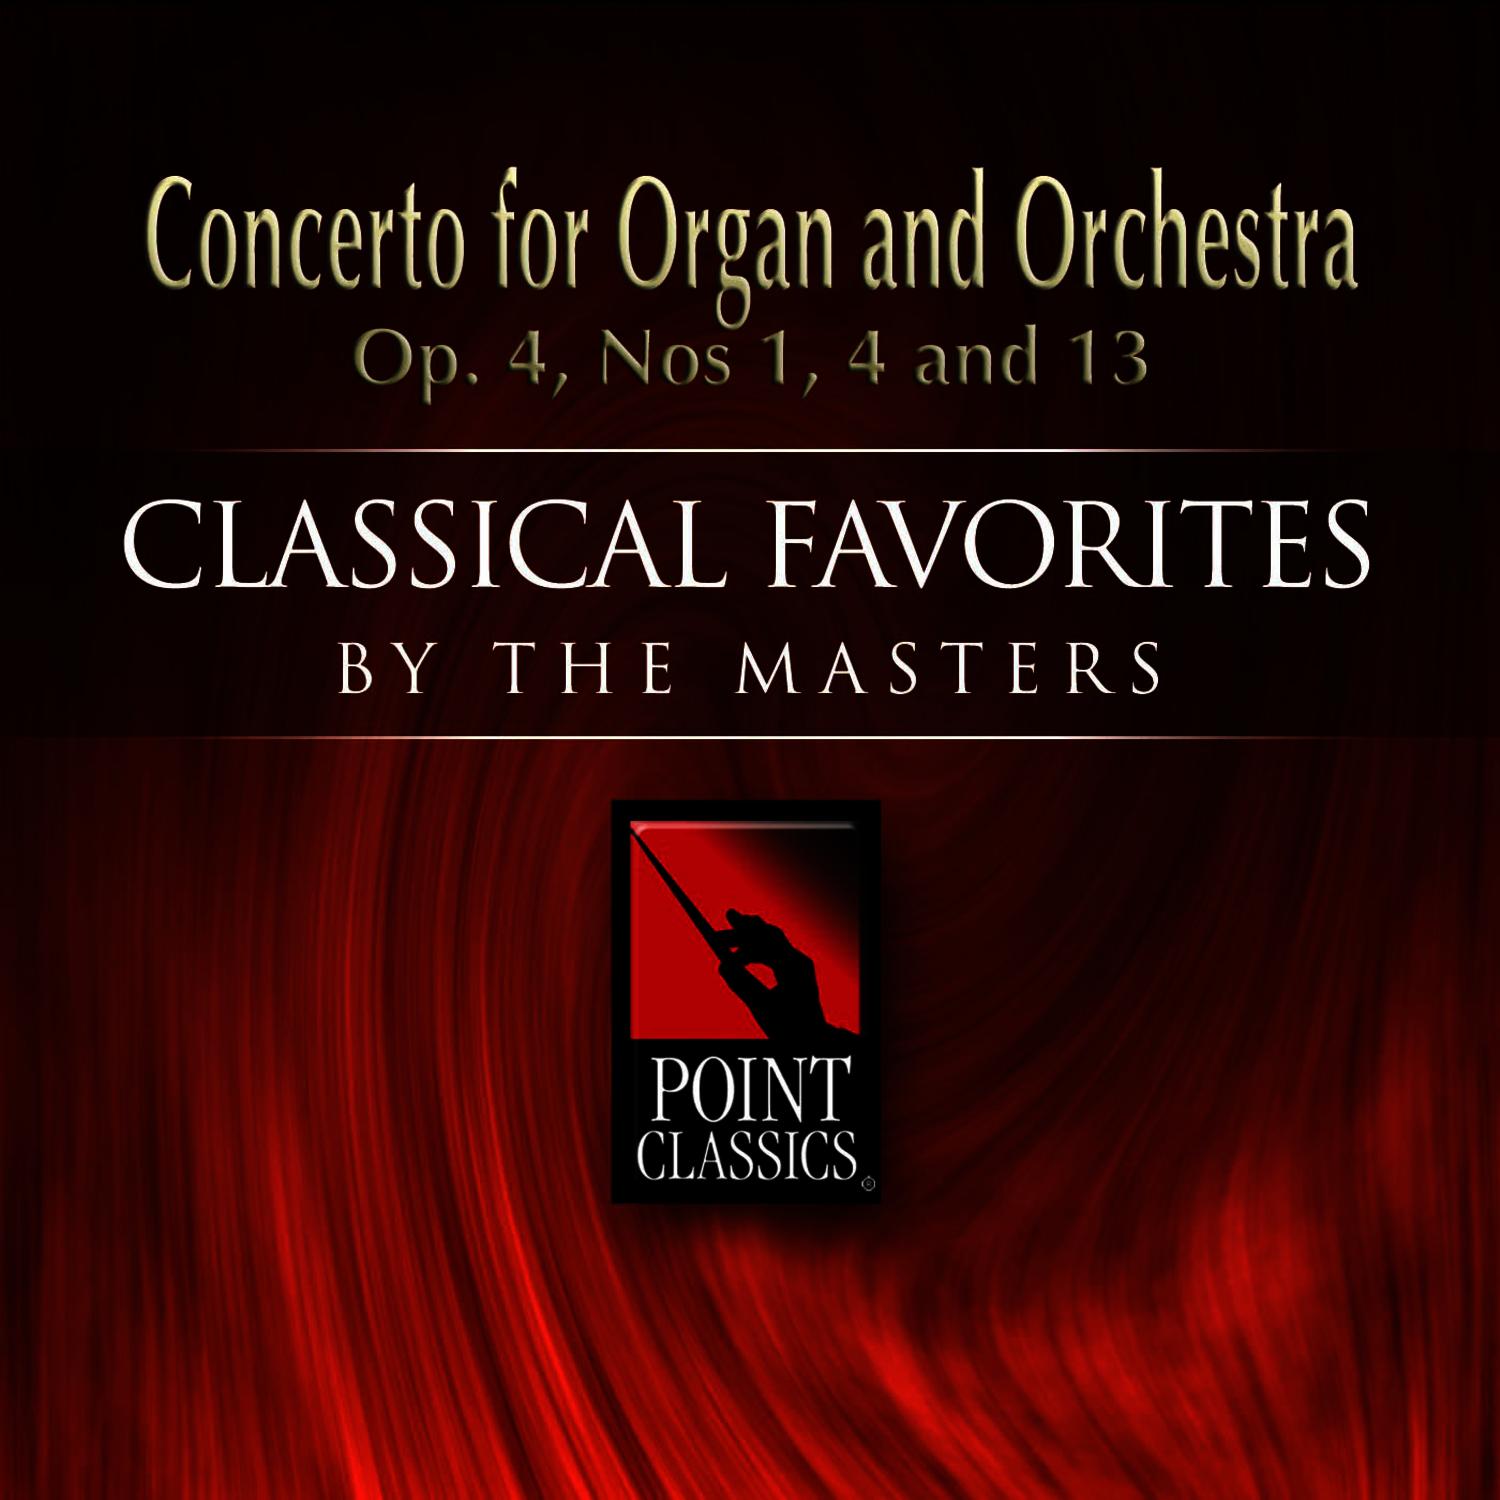 Concerto for Organ and Orchestra Op. 4 No. 1 in G minor: Larghetto e staccato